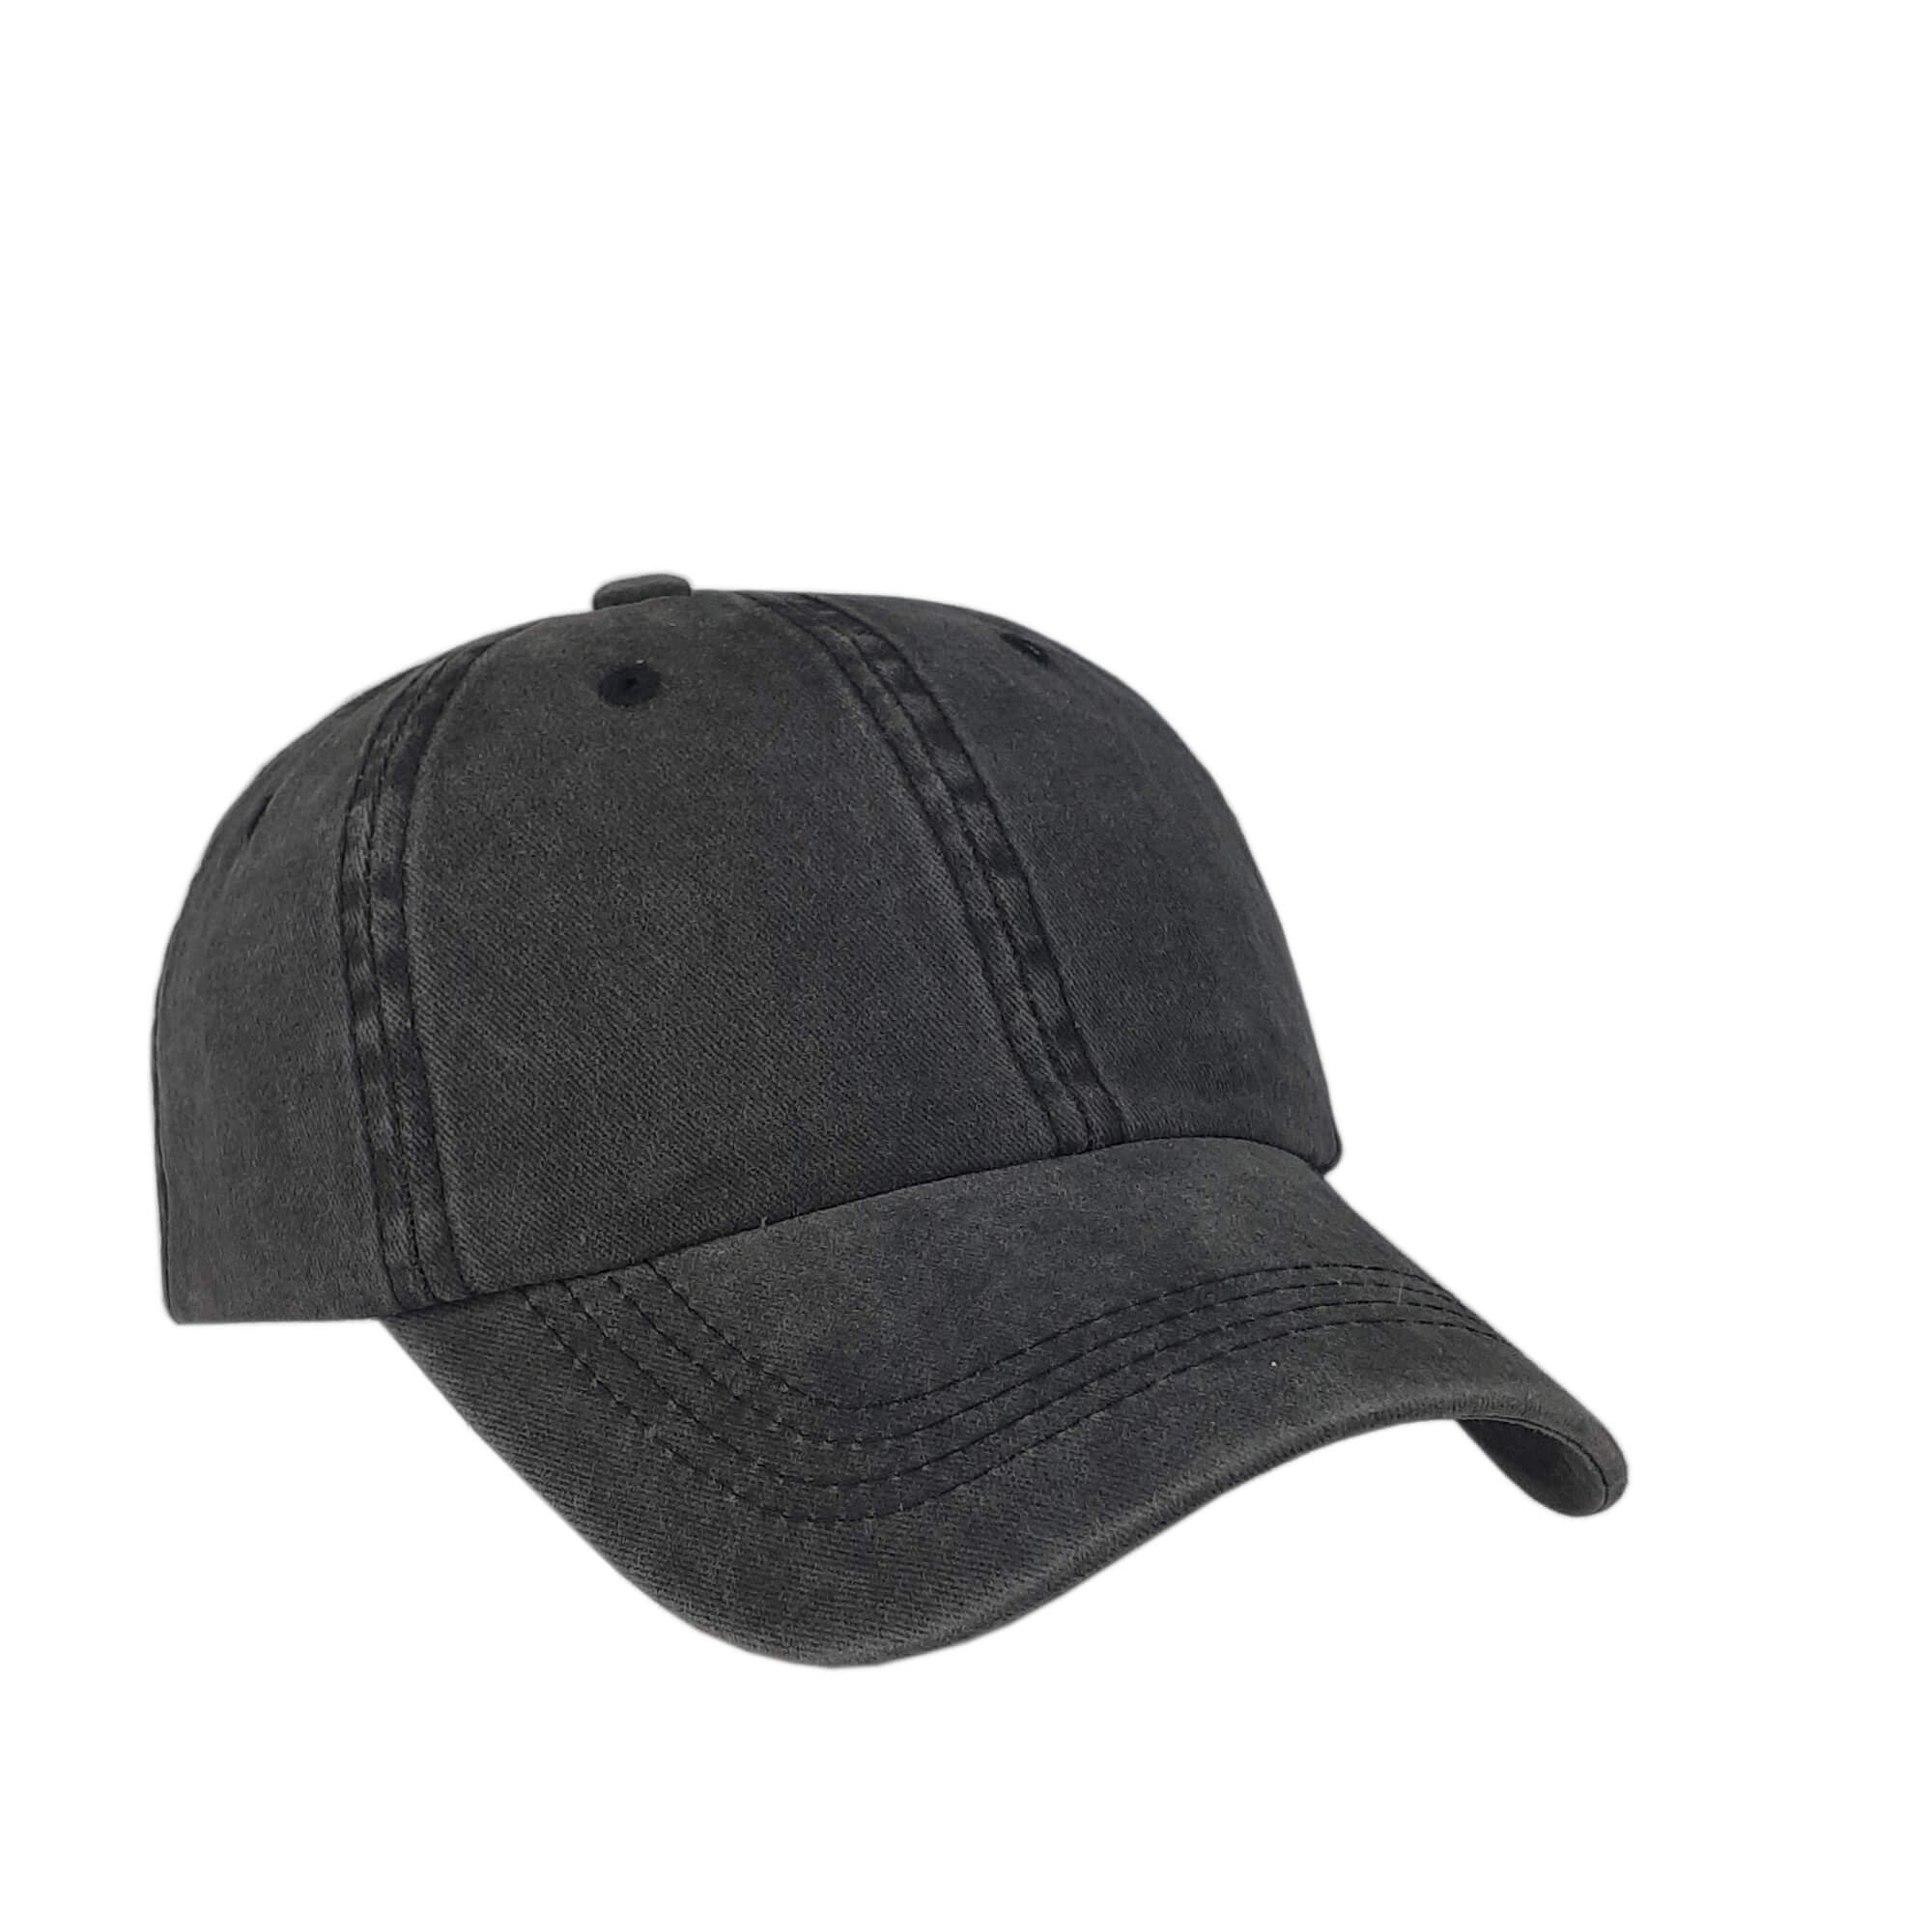 Leoberg Unisex Cap Baseballkappe - Baseball-Cap Kappe Schirmmütze Damen  Herren in verschiedenen Farben und Designs | tomBrook Shop